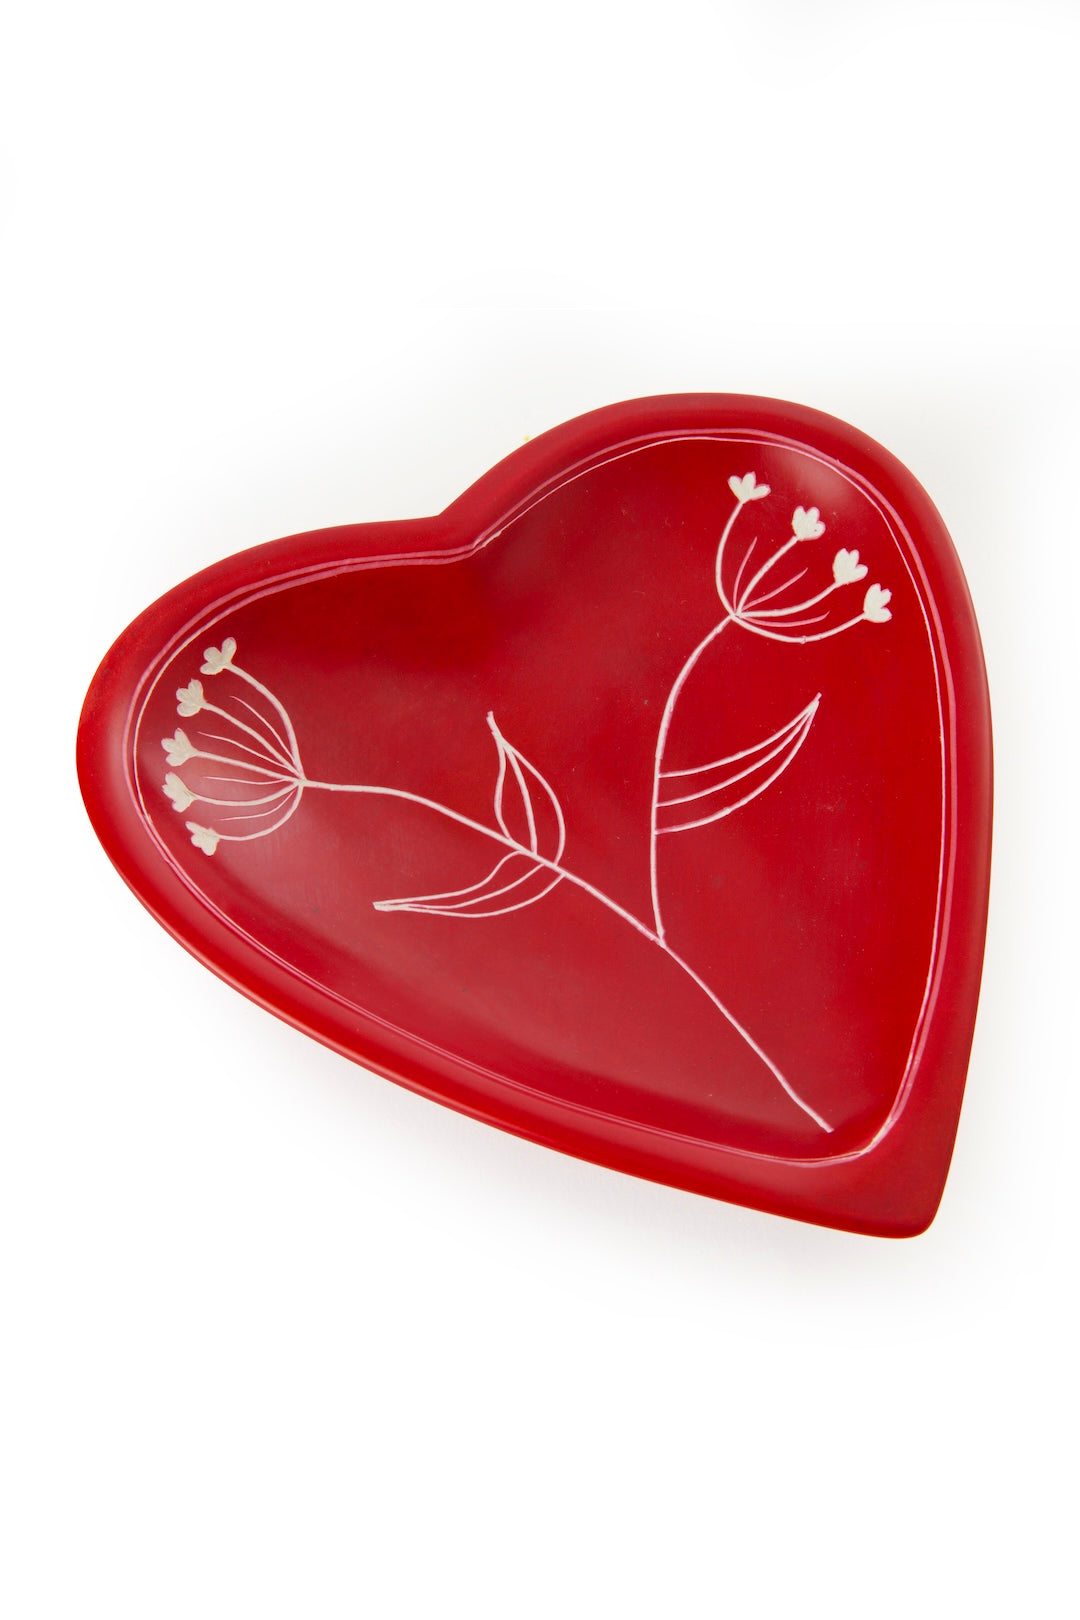 Ammi Flower Heart-Shaped Soapstone Dish